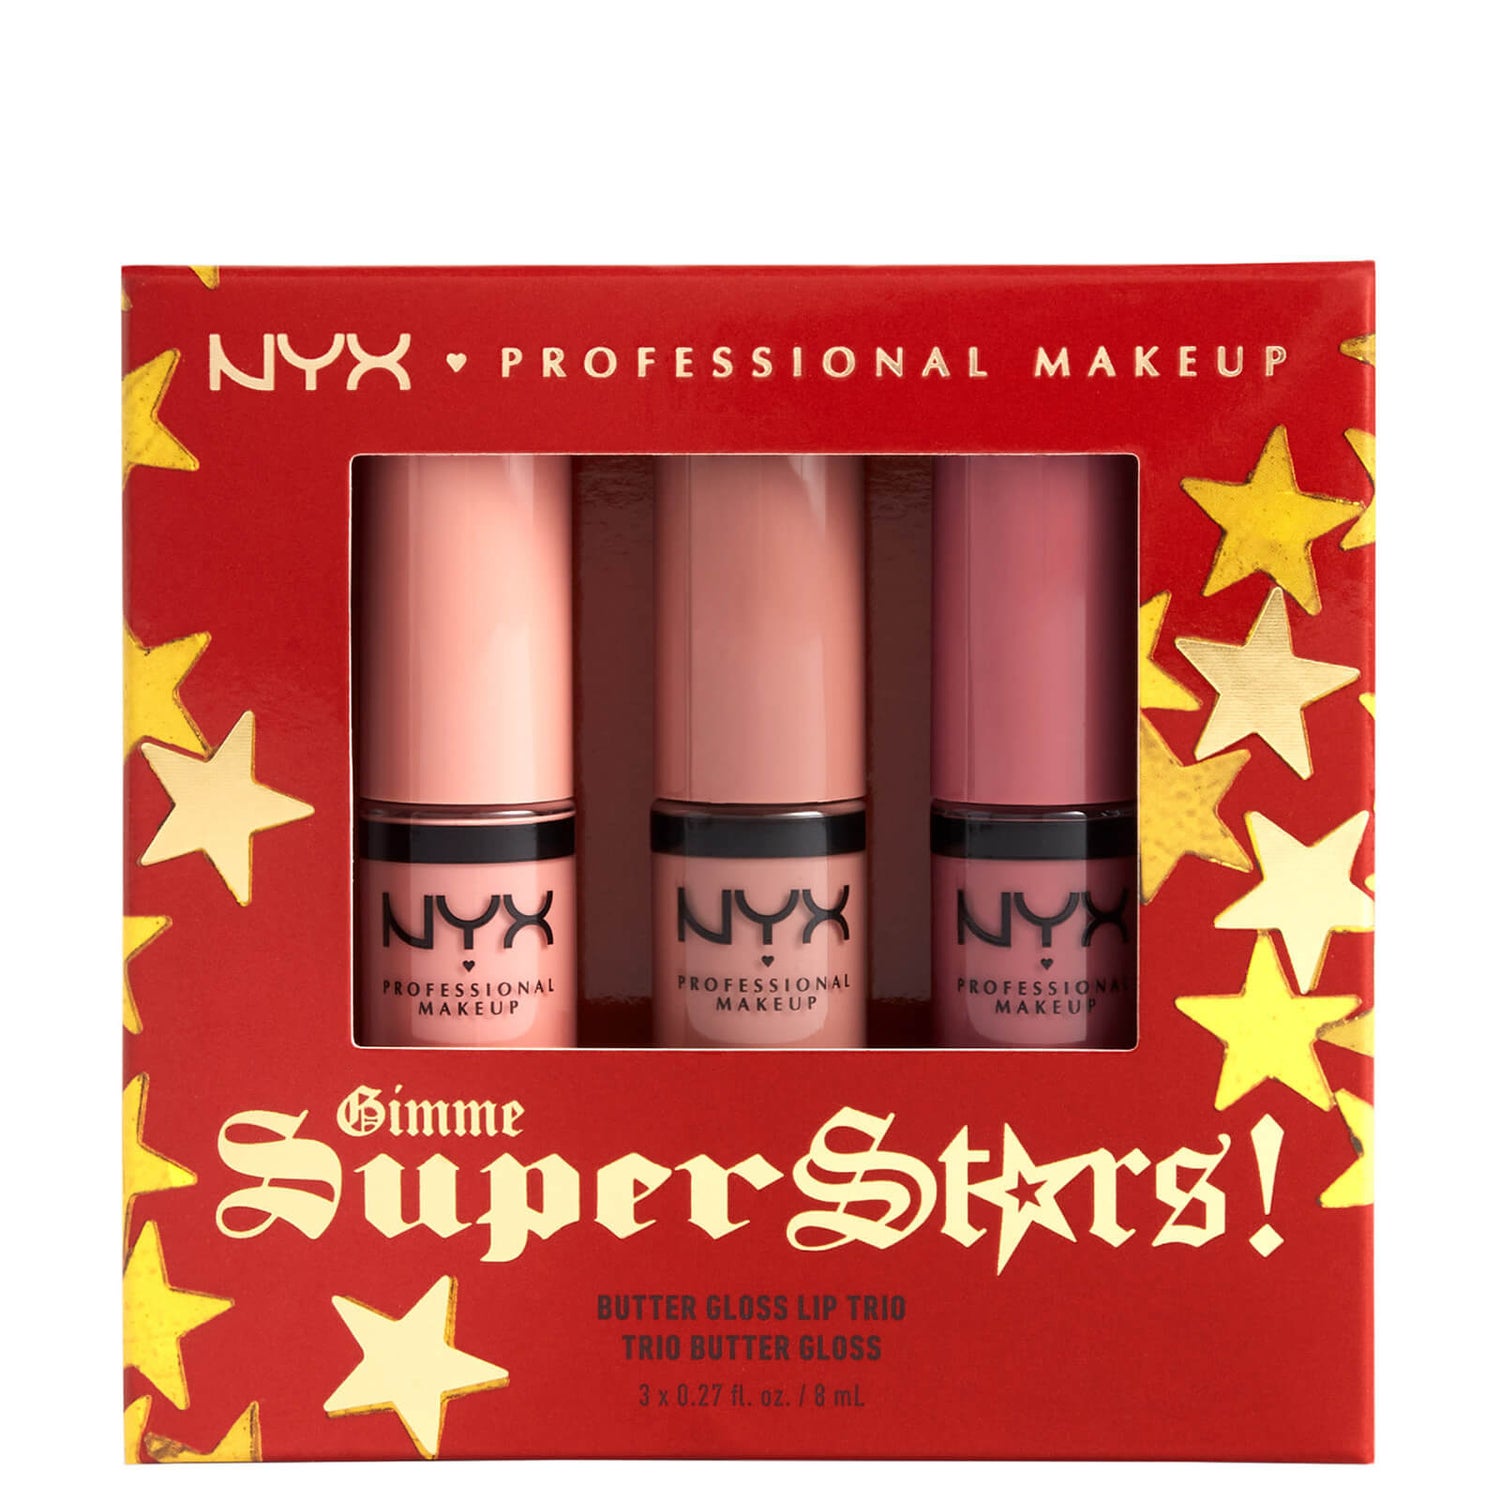 NYX Professional Makeup Gimme Super Stars! Σετ δώρου Butter Gloss Lip Trio Light Nude